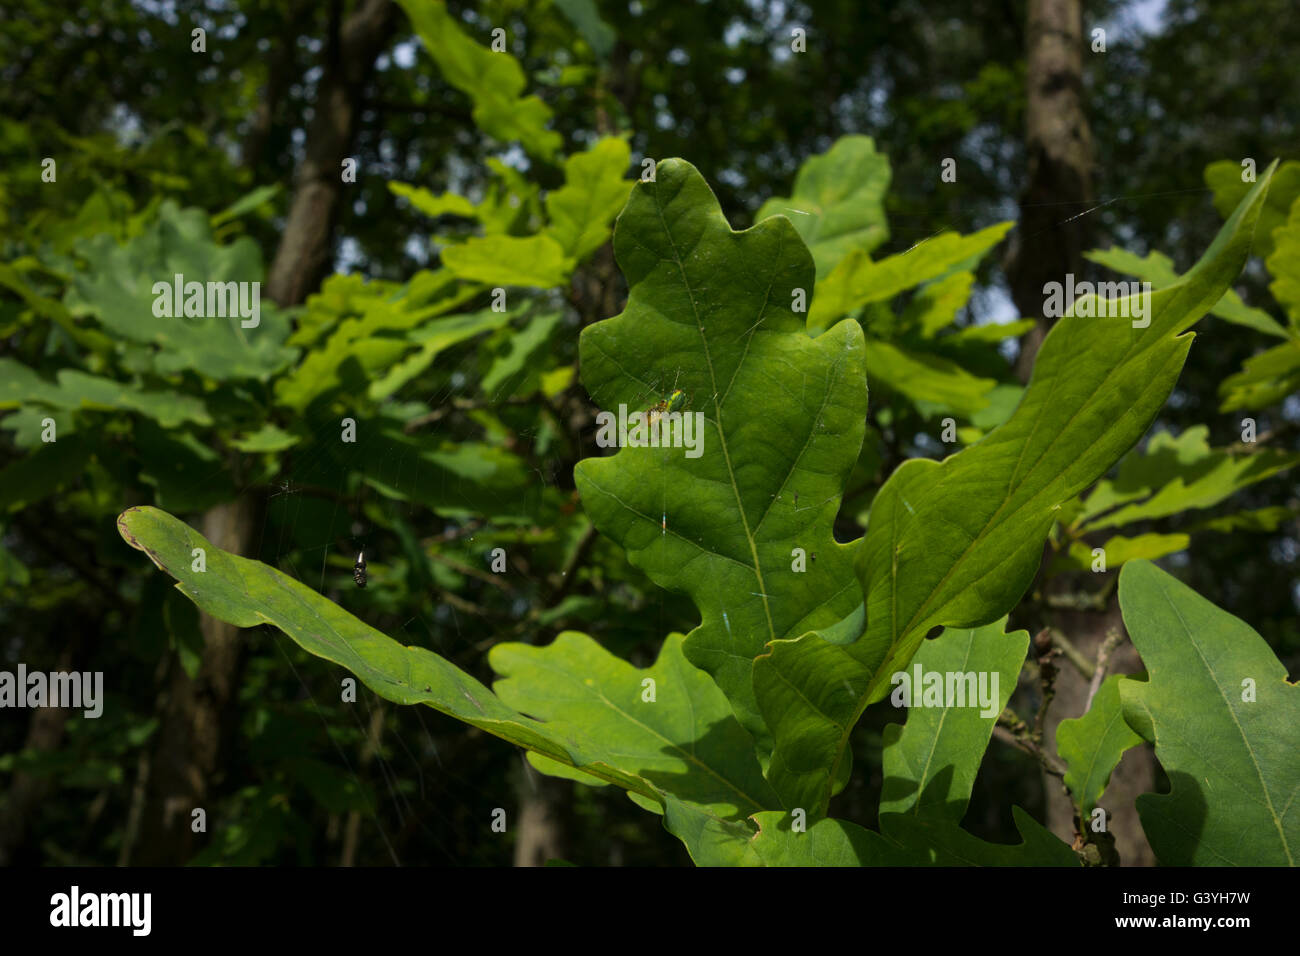 Cucumber green spider (Araniella cucurbitina) between leaves, Germany. Stock Photo